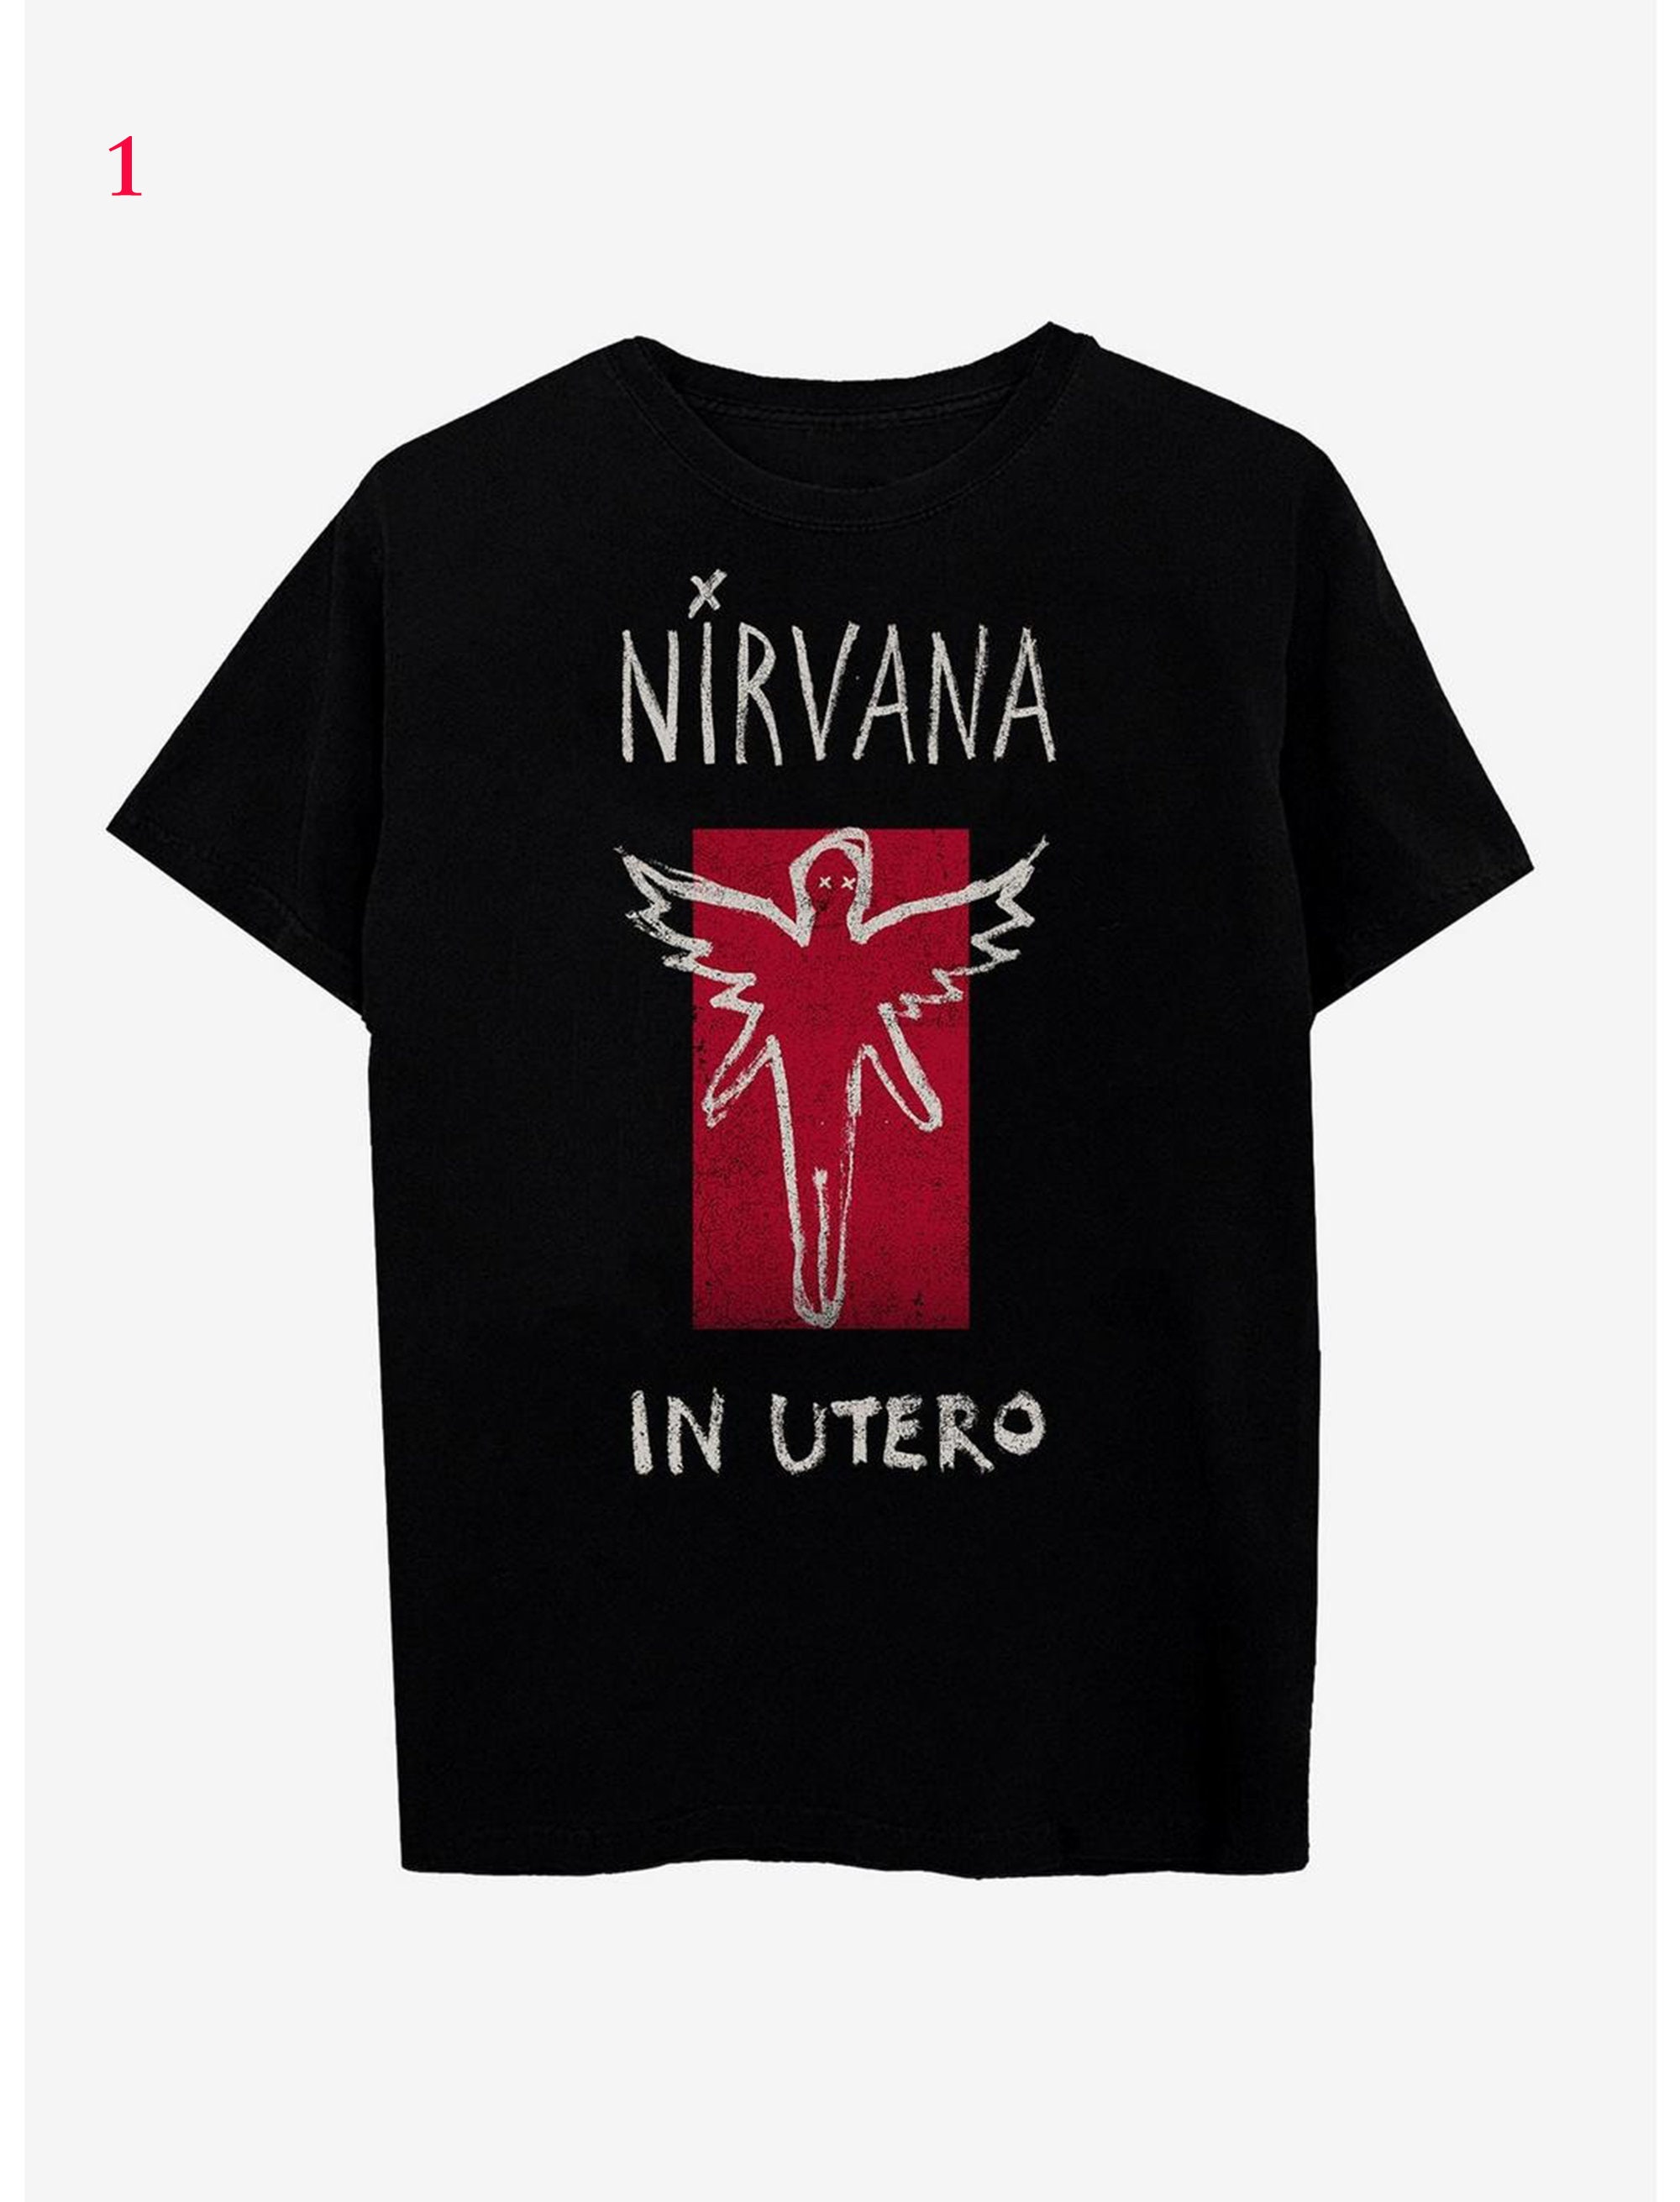 Discover Nirvana T-Shirt, Nirvana Vintage Shirt